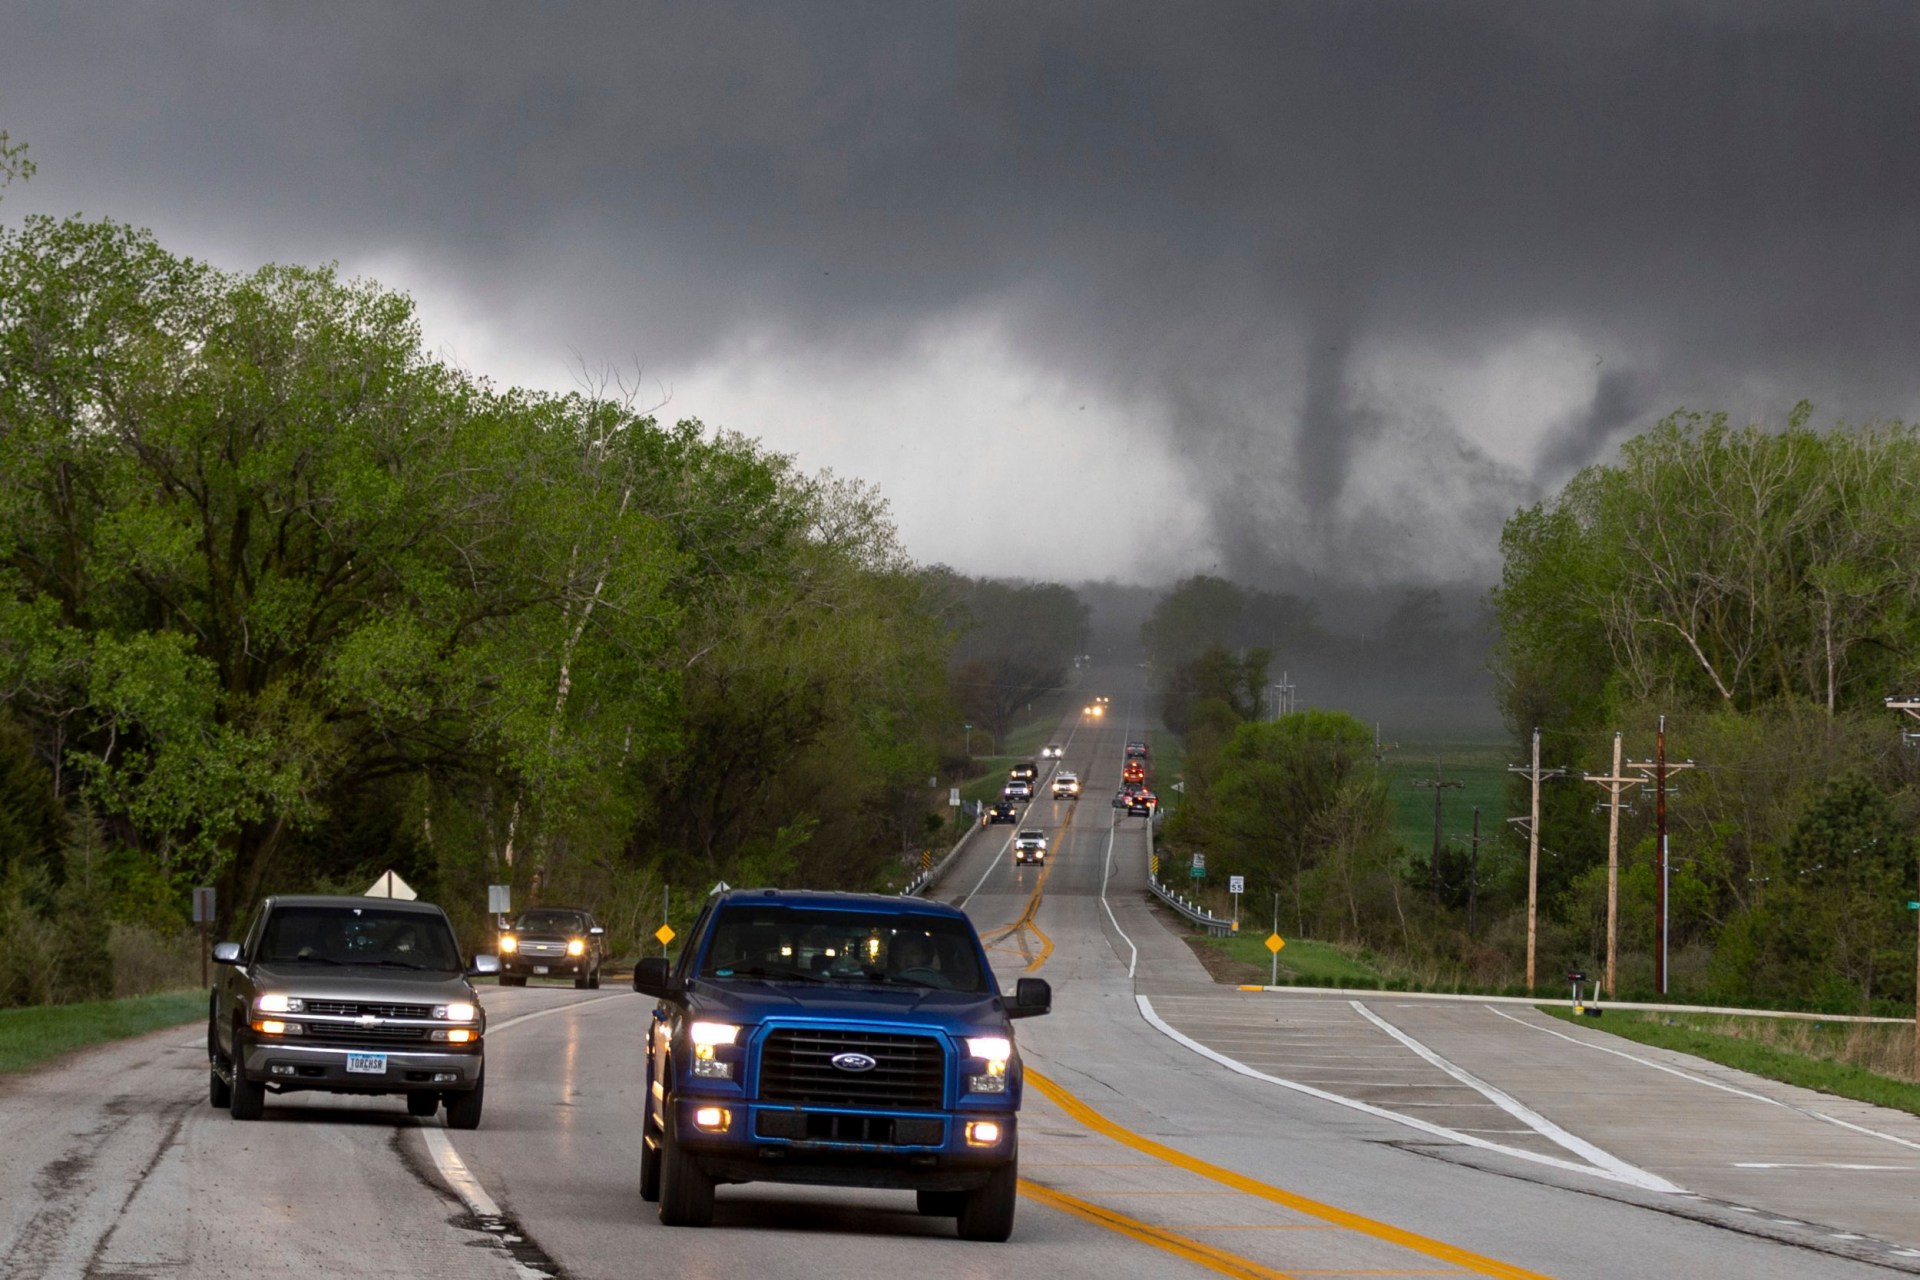 devastating tornado rips through nebraska destroying hundreds of homes